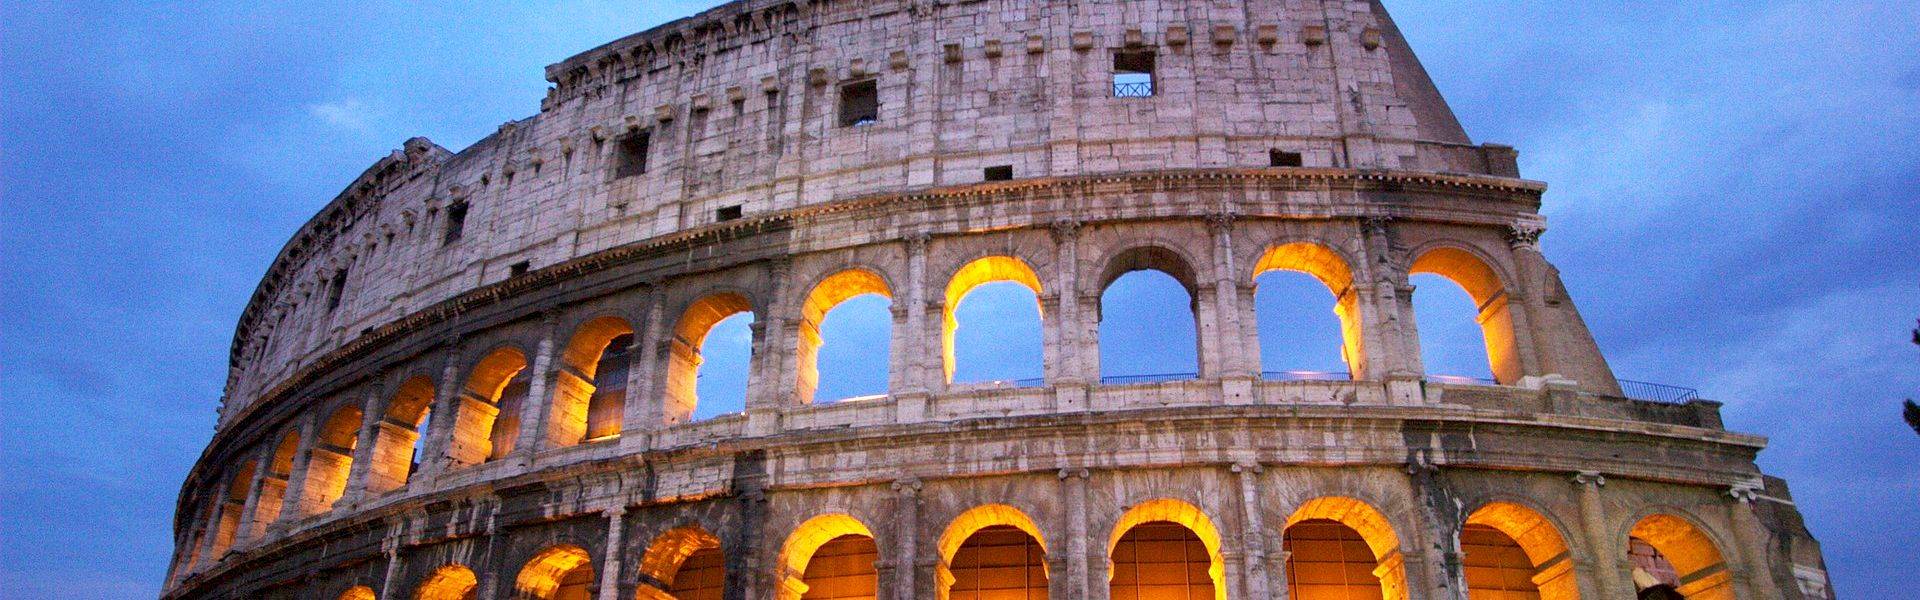 Italy Colosseum Night